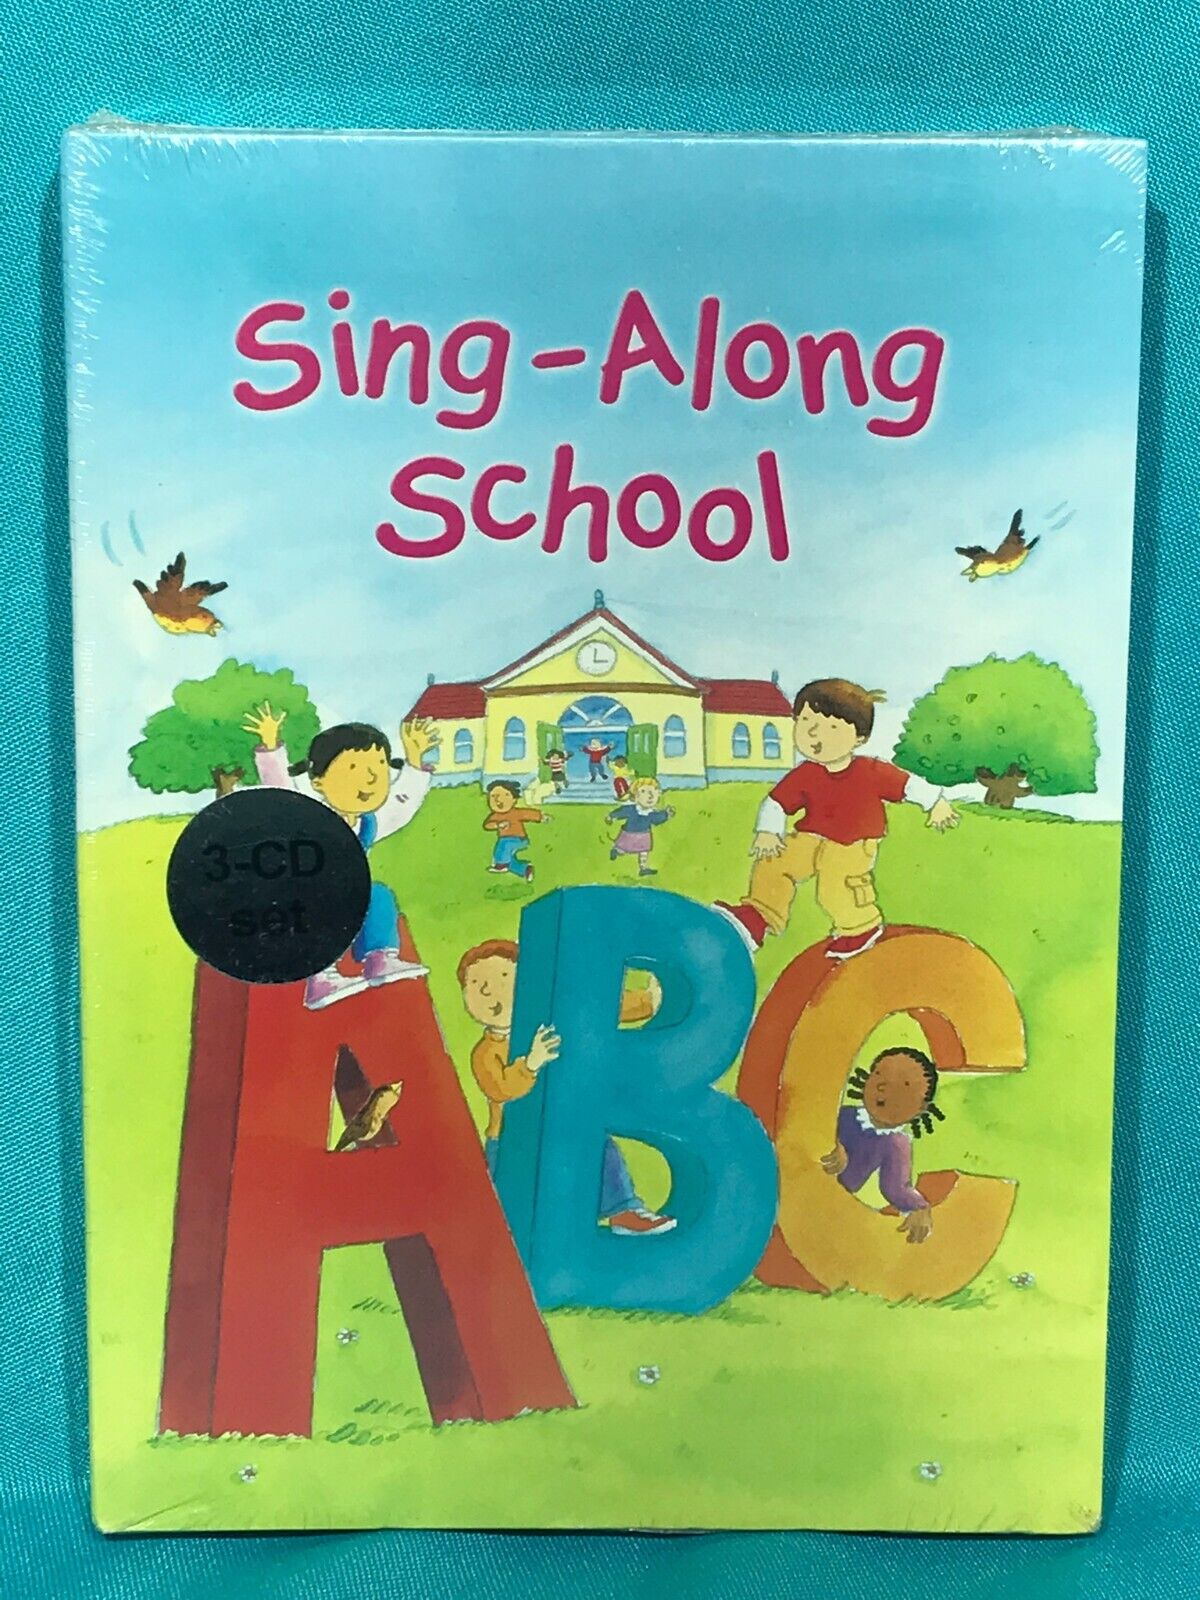 NEW SEALED Sing-Along School - Audio CD By Sing-Along School